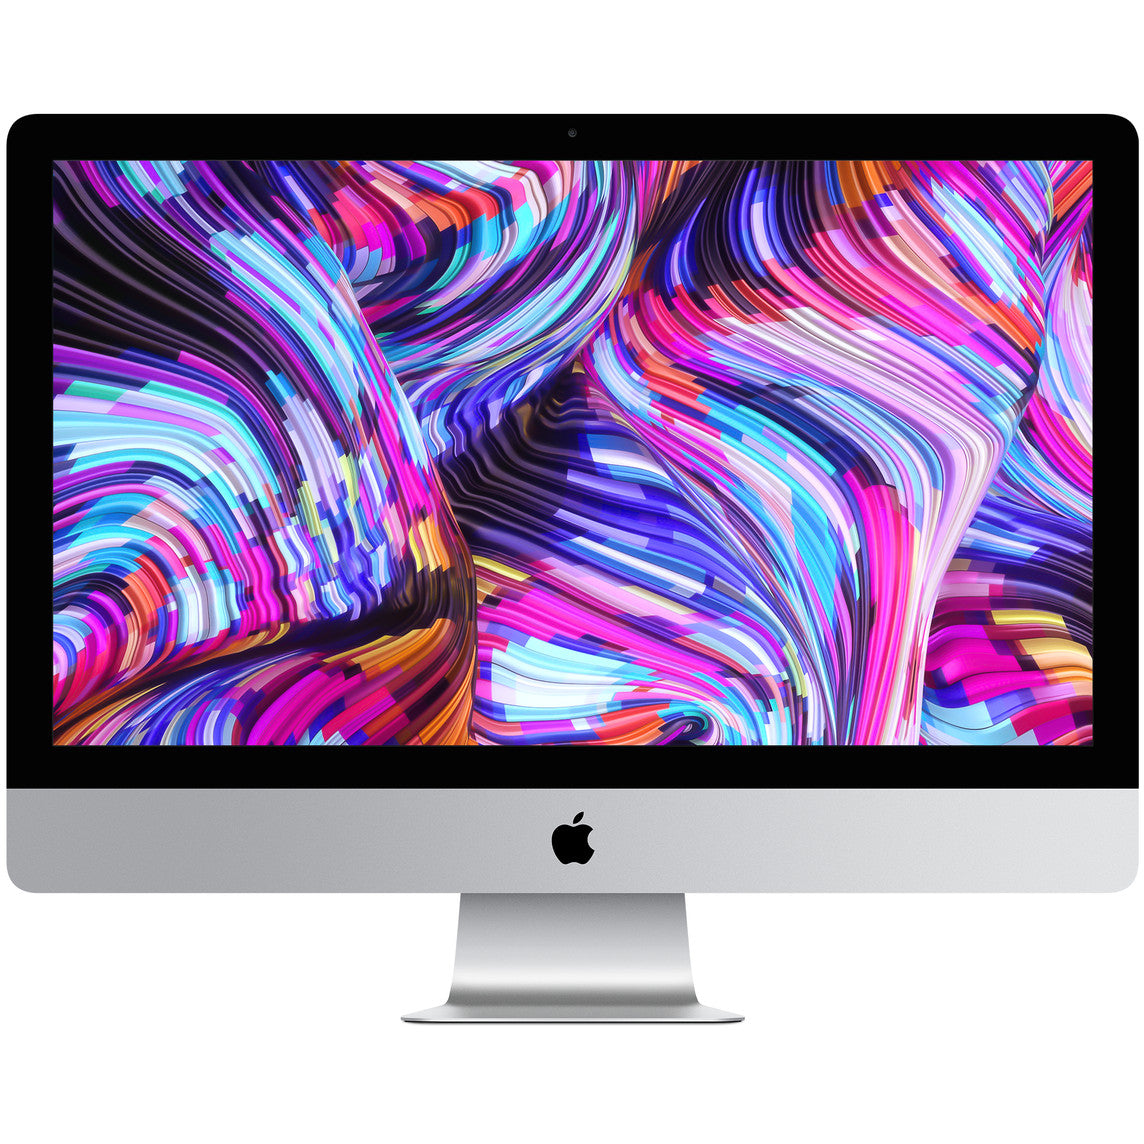 Apple iMac 27-inch 5K Desktop 3.1Ghz i5 Six-Core 8GB RAM 1TB HDD (Silver)